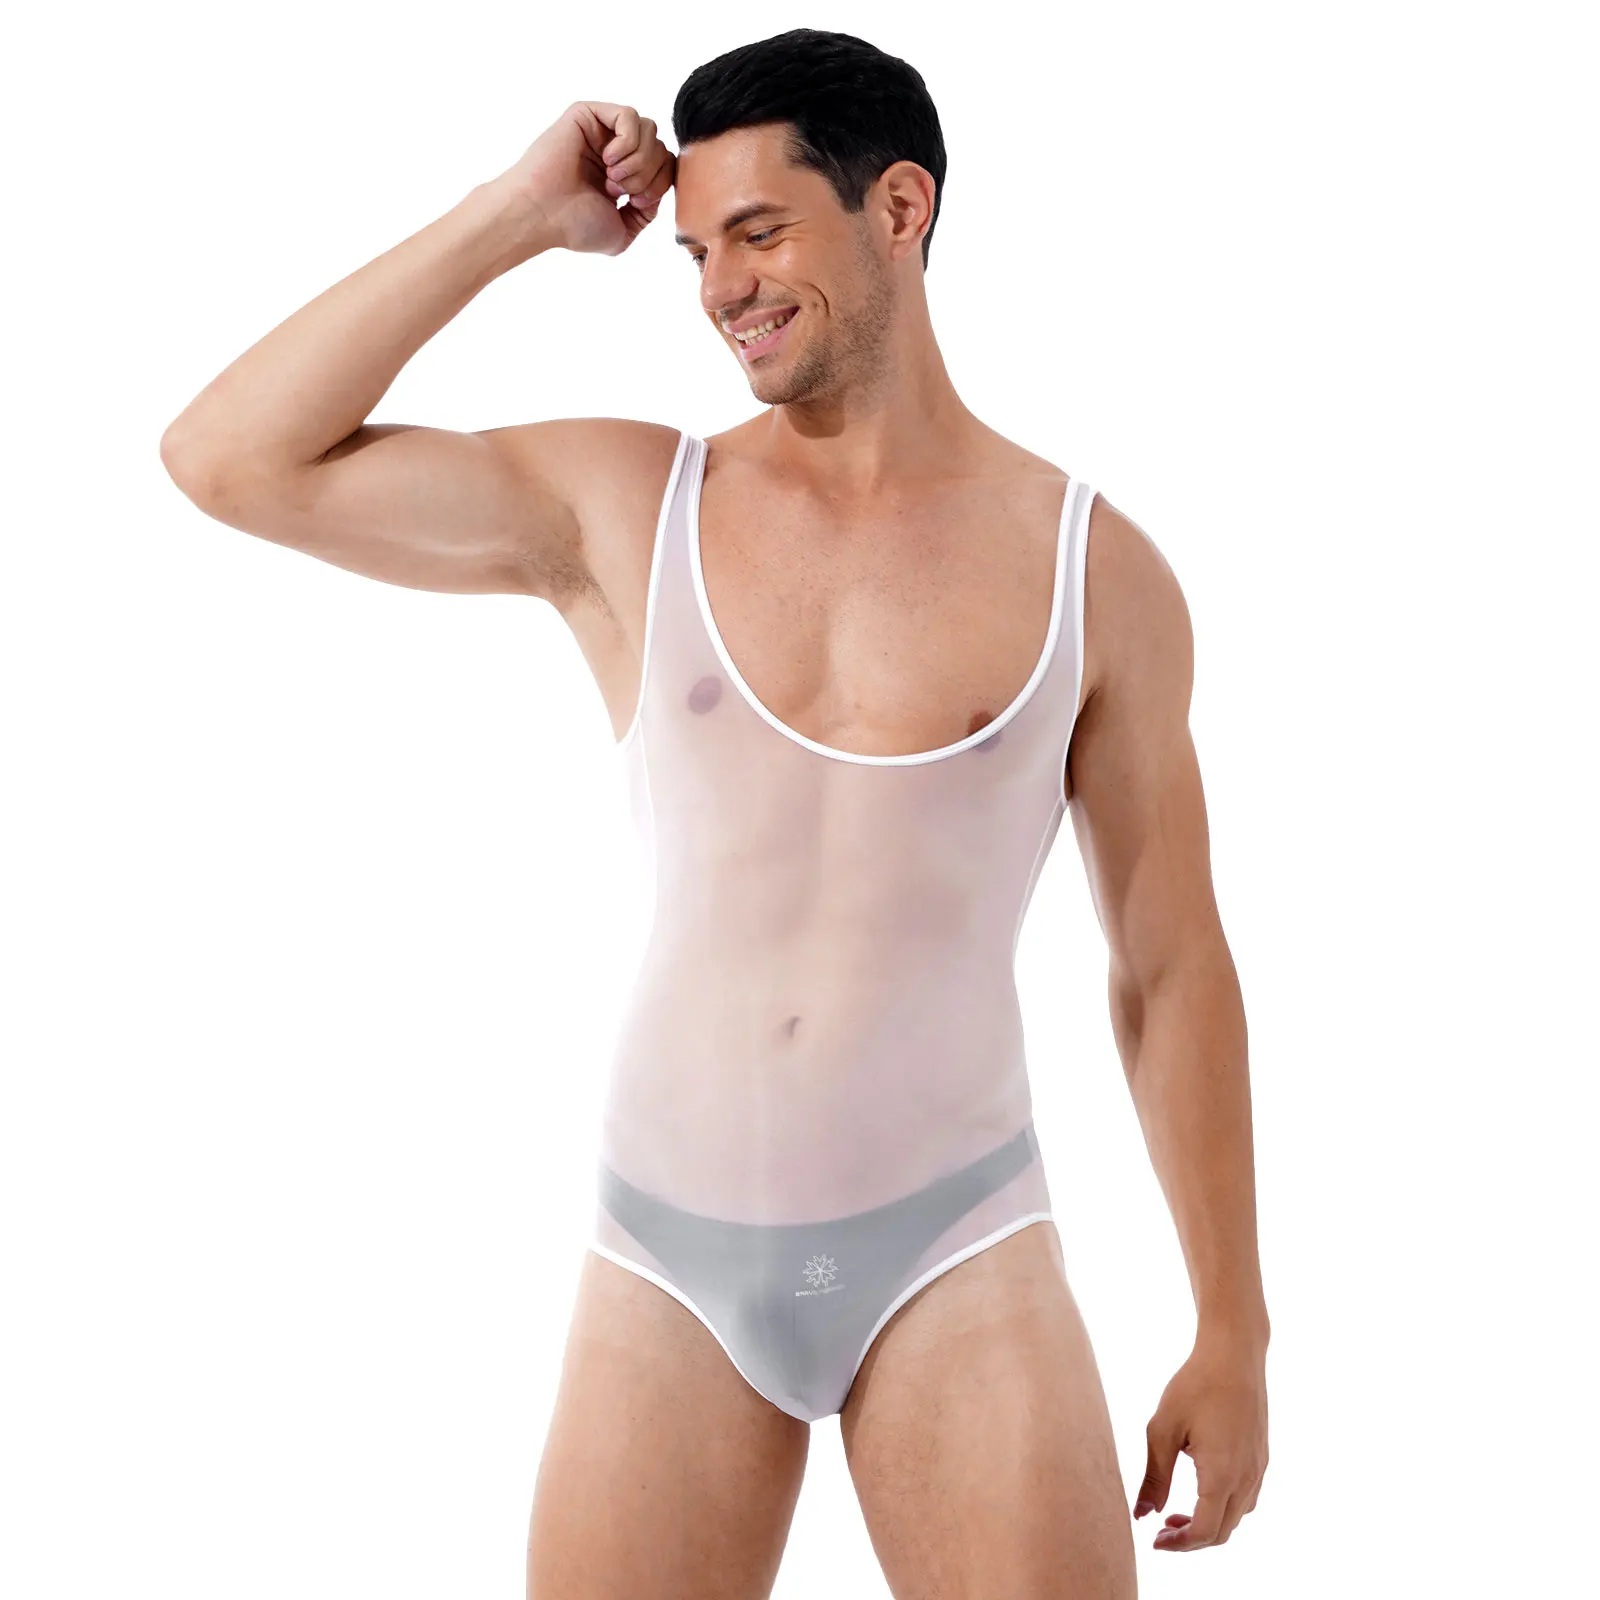 

Men Exotic See-through Bodysuit Underwear Glossy Scoop Neck Sleeveless Leotard for Lingerie Party Honeymoon Gift